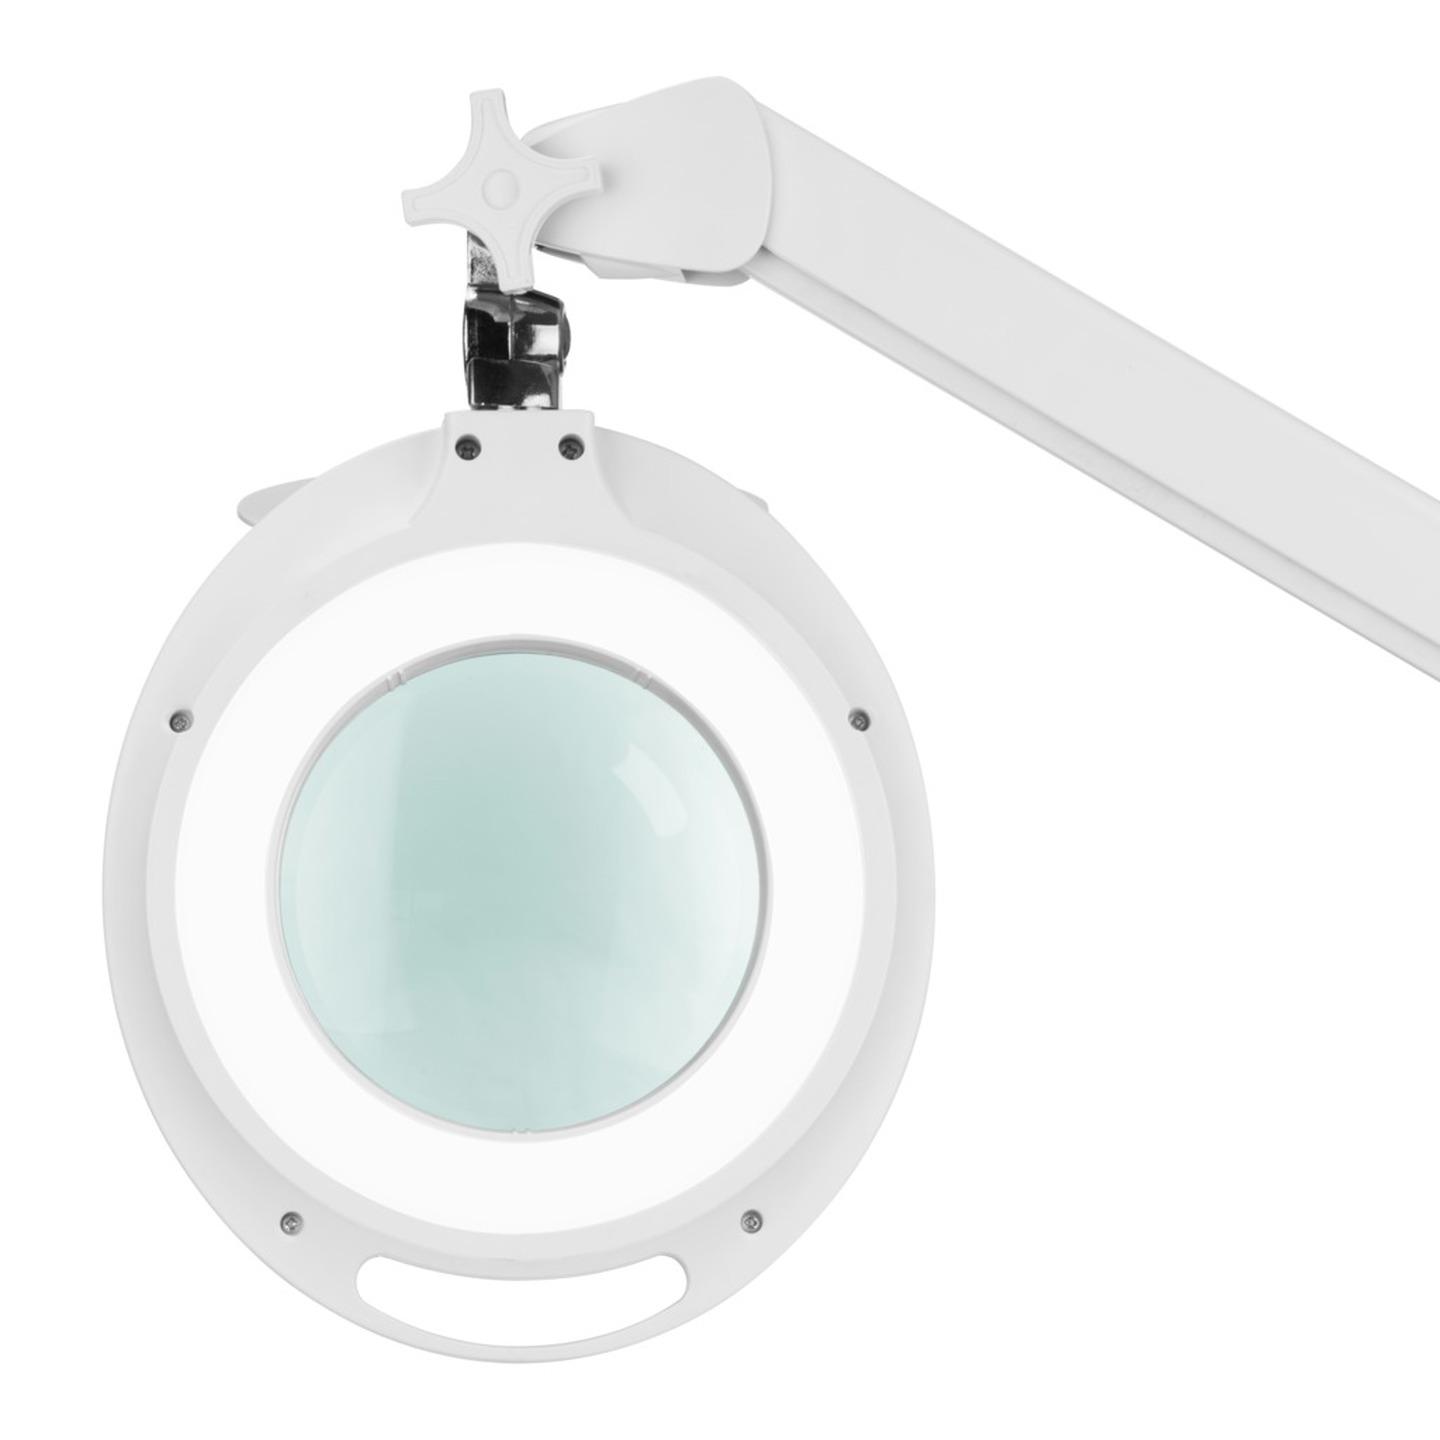 LED Illuminated Clamp Mount Magnifier